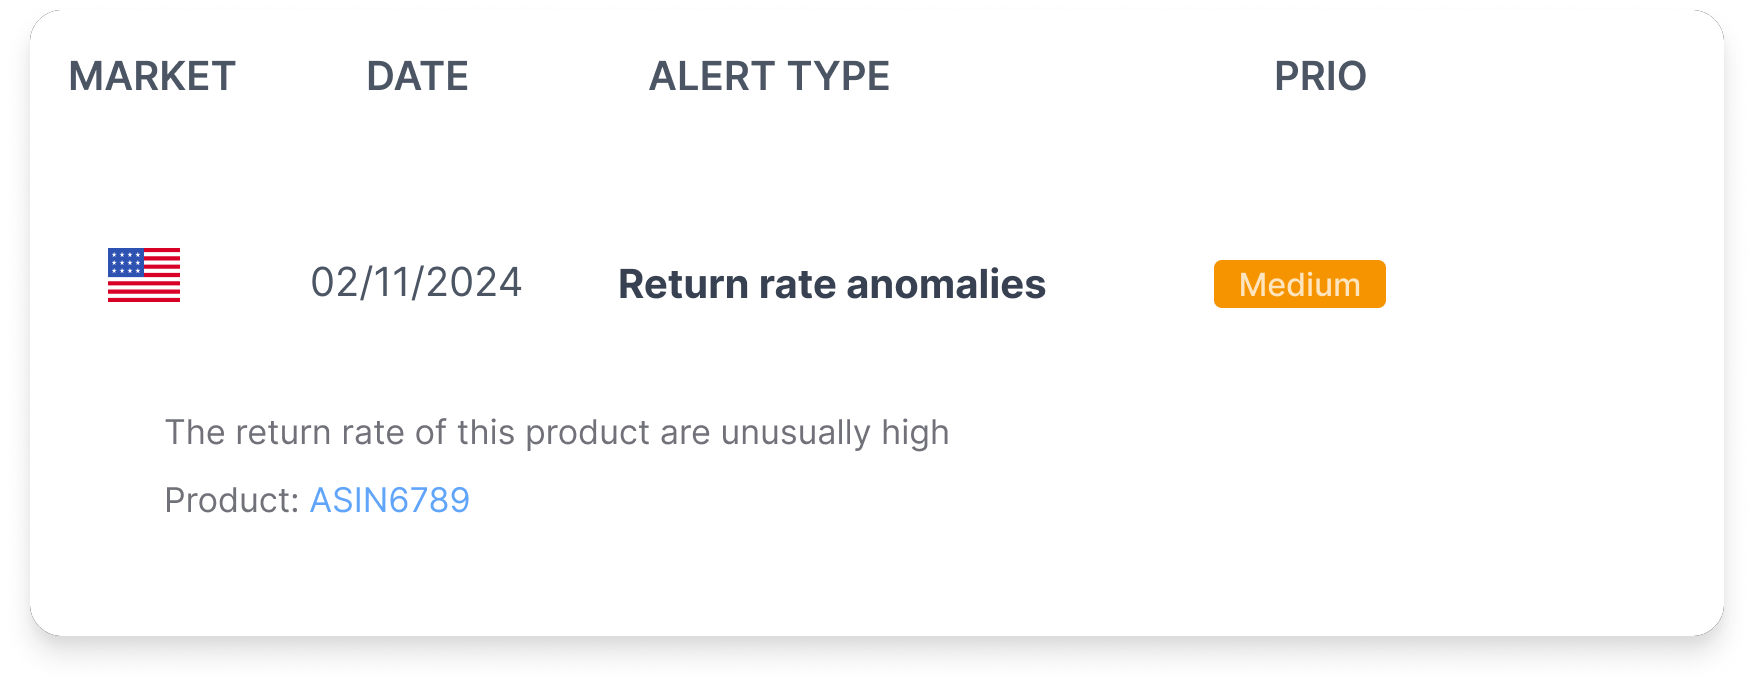 Amazon Alert Return rate anomalies additional information